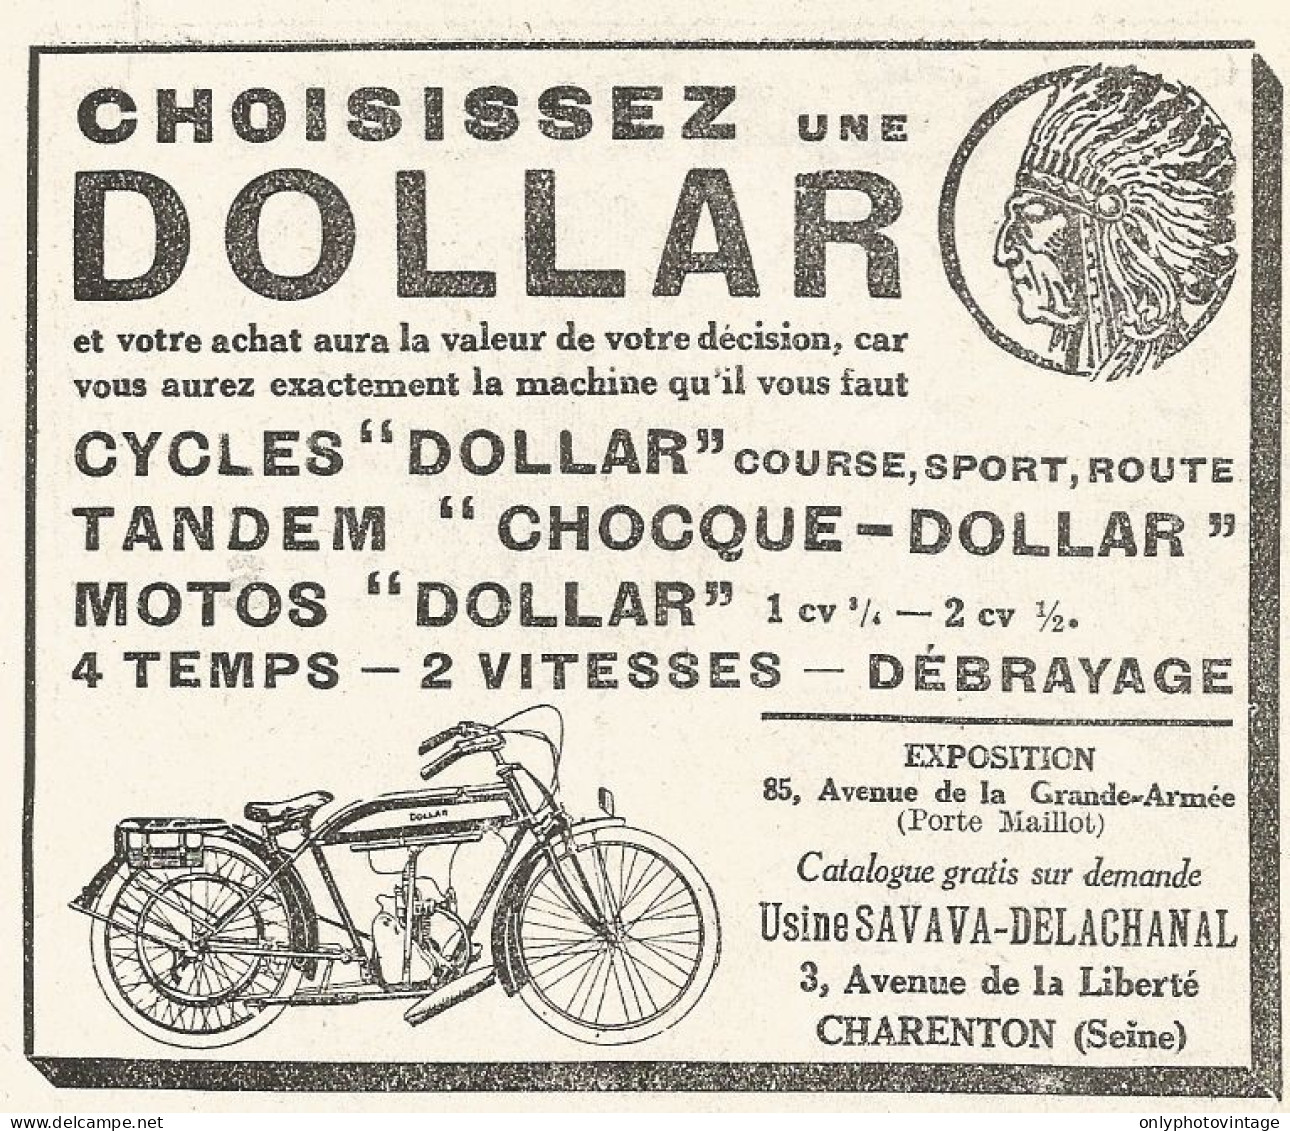 Motocicletta DOLLAR - Pubblicitï¿½ Del 1925 - Old Advertising - Reclame